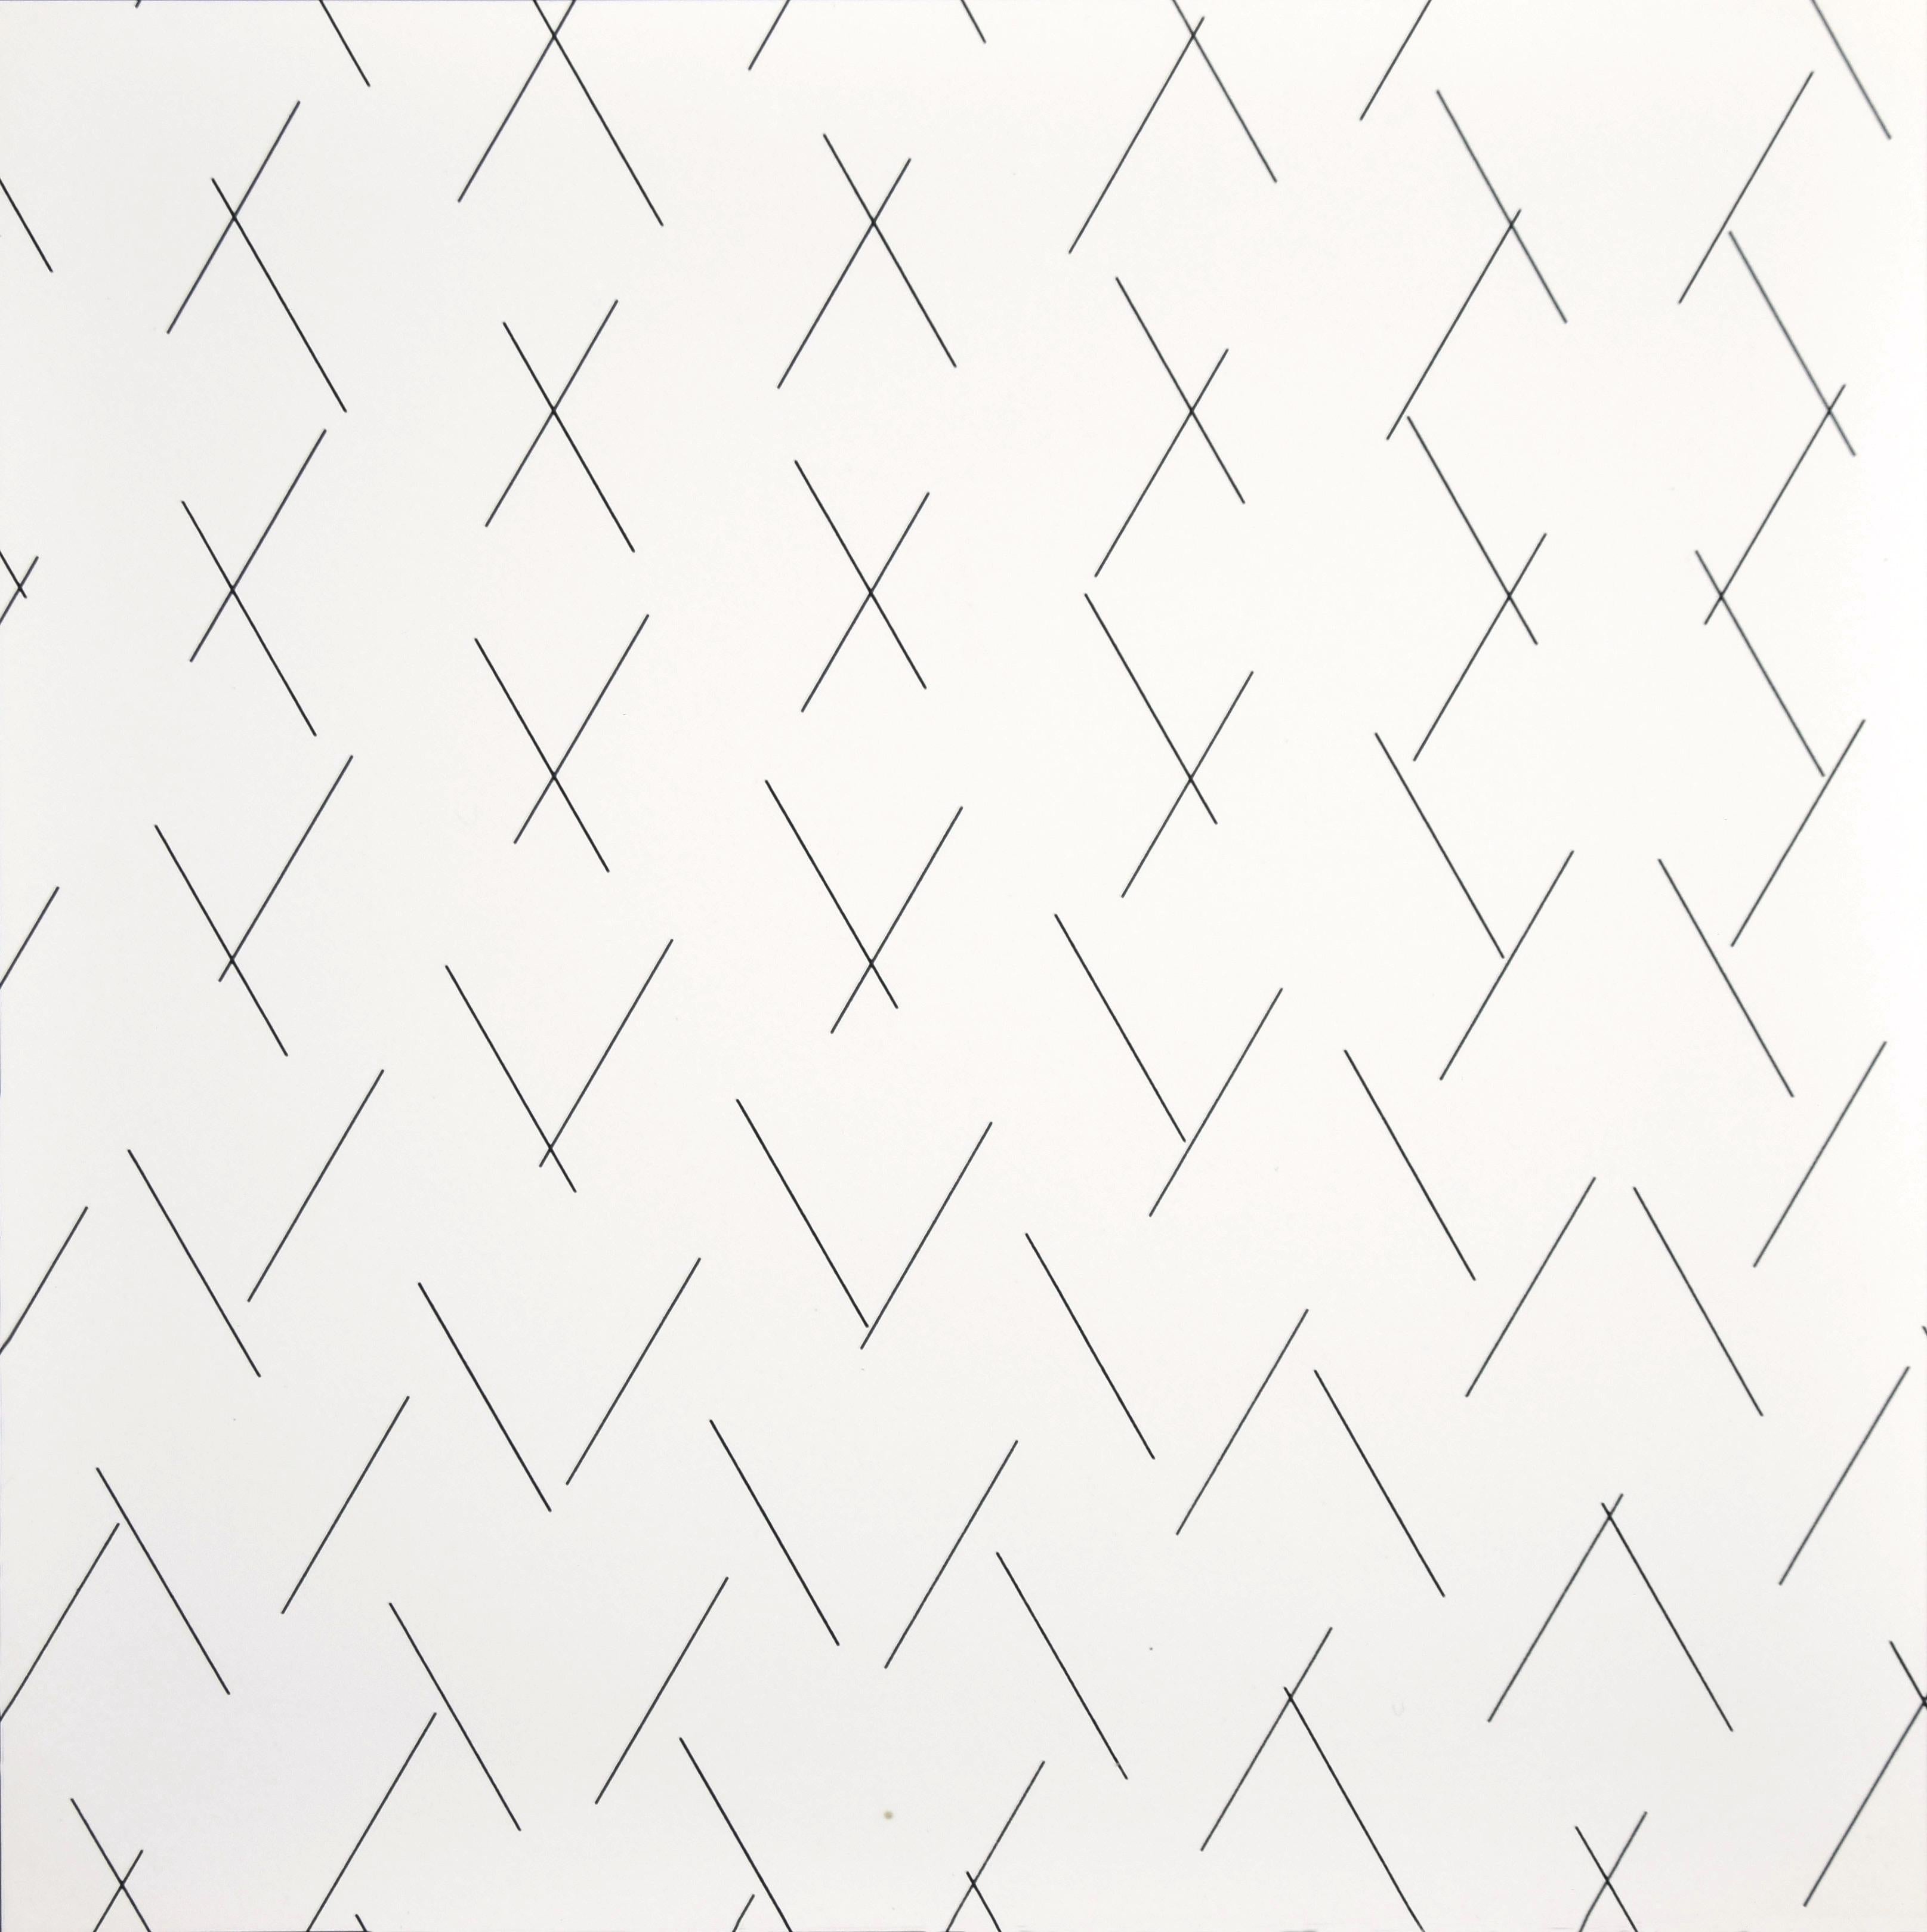 Francois Morellet Abstract Print – Sich kreuzende Linien - Platte 3 - Siebdruck von François Morellet - 1975